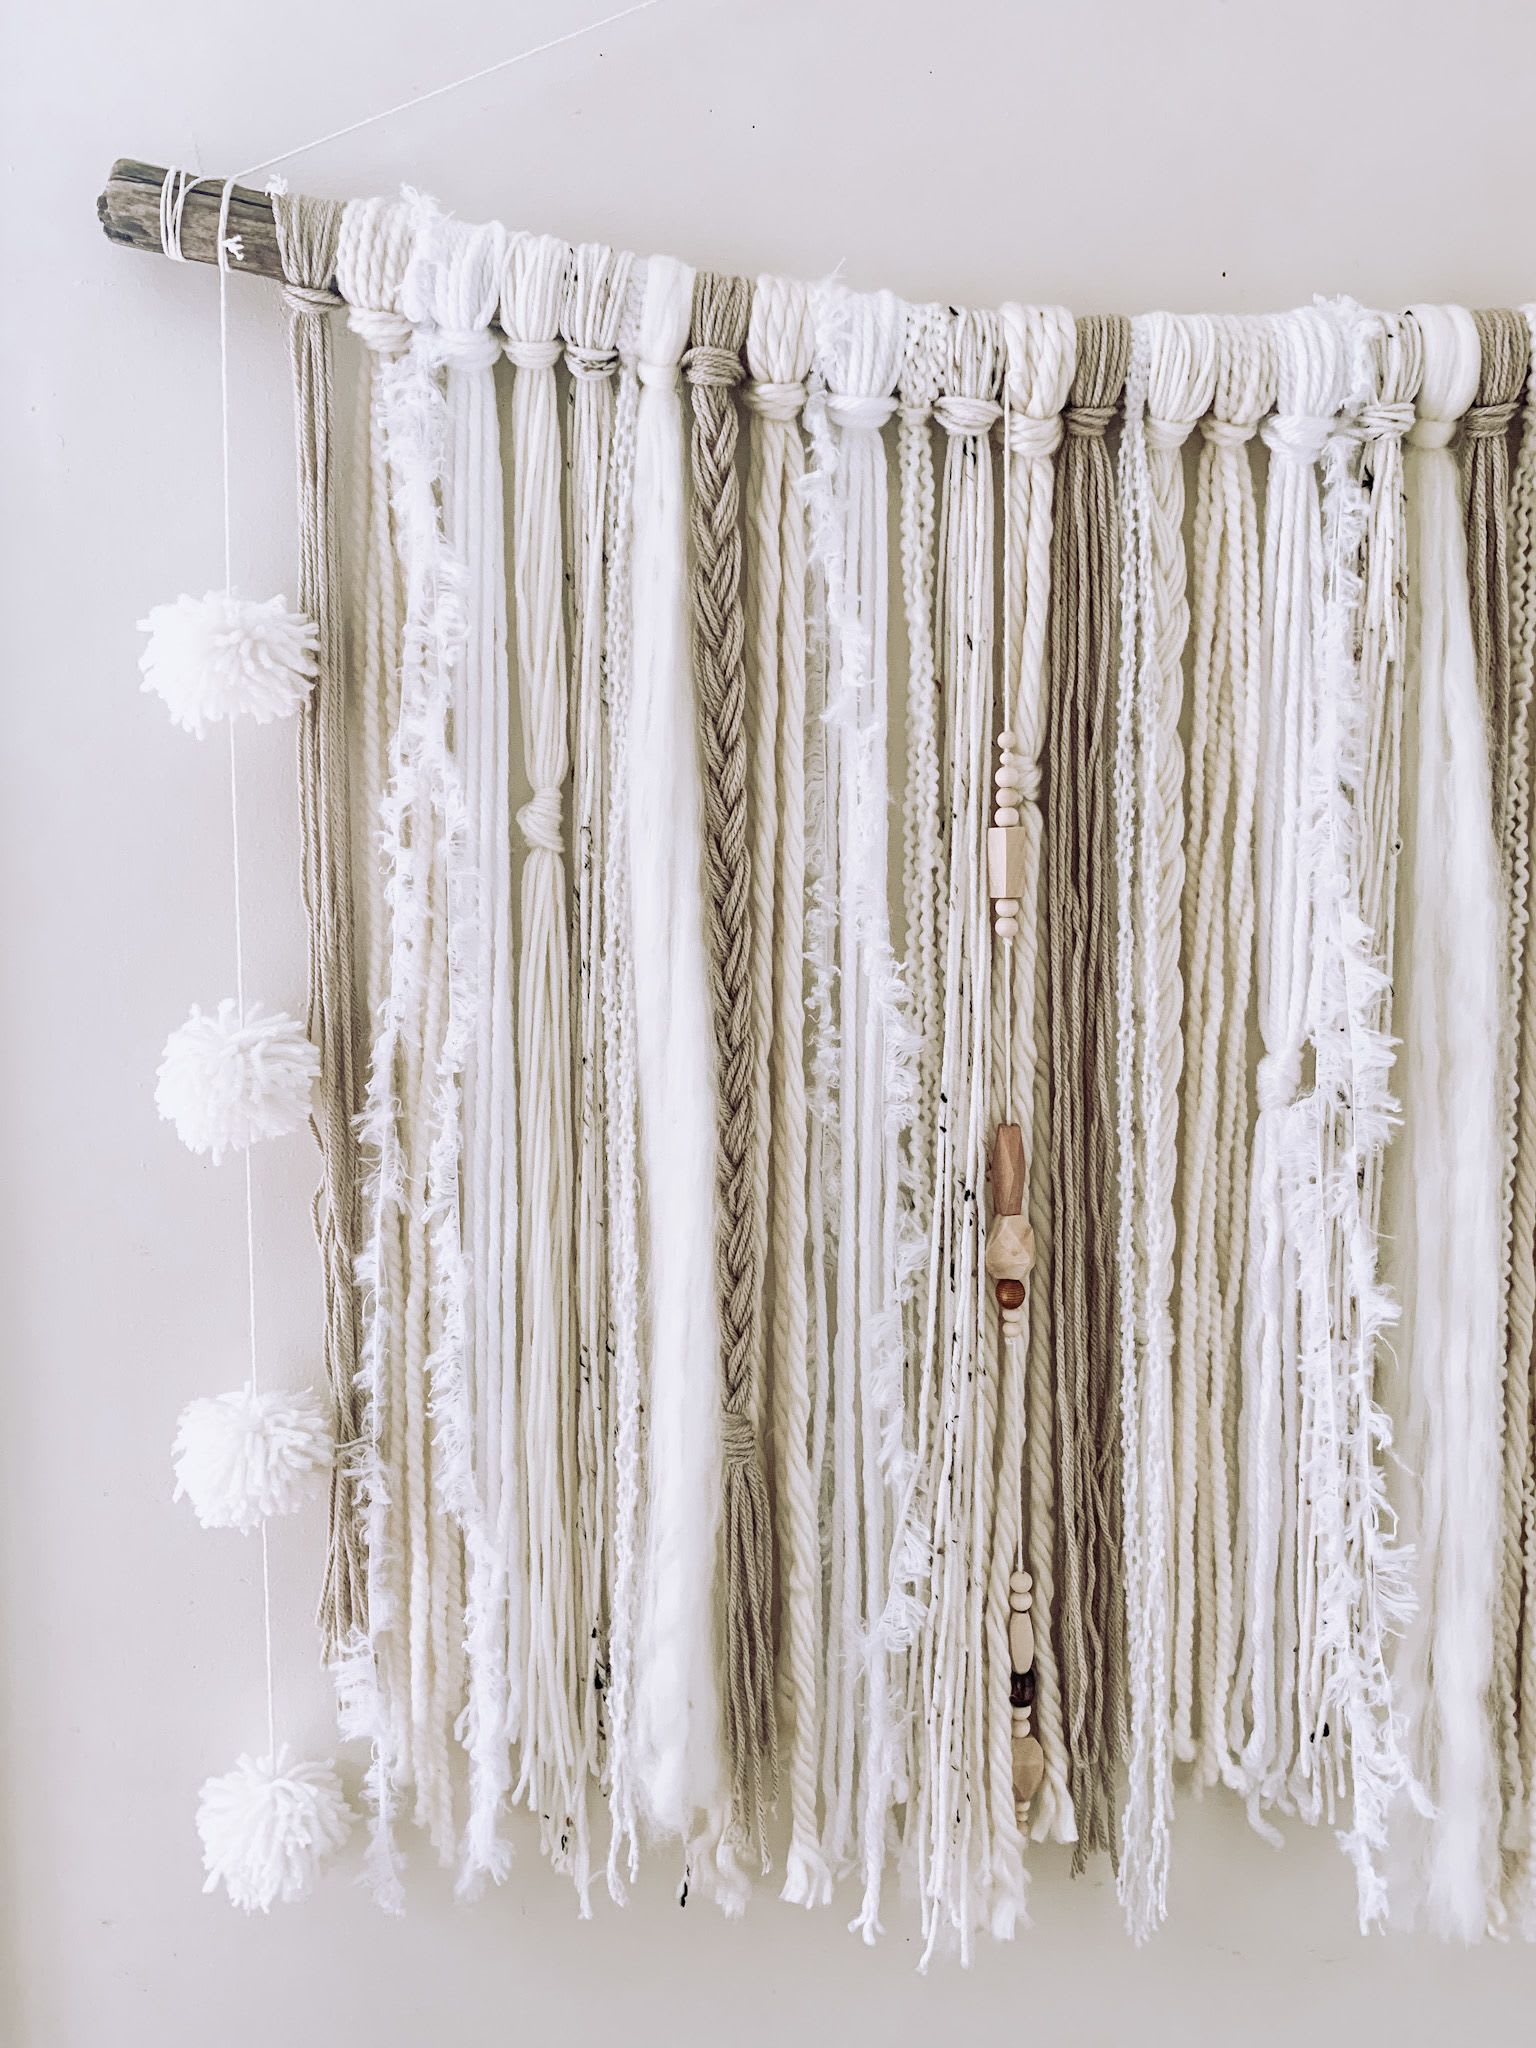 Large Handmade Textured Yarn Wall Hanging Decor - Boho Style by